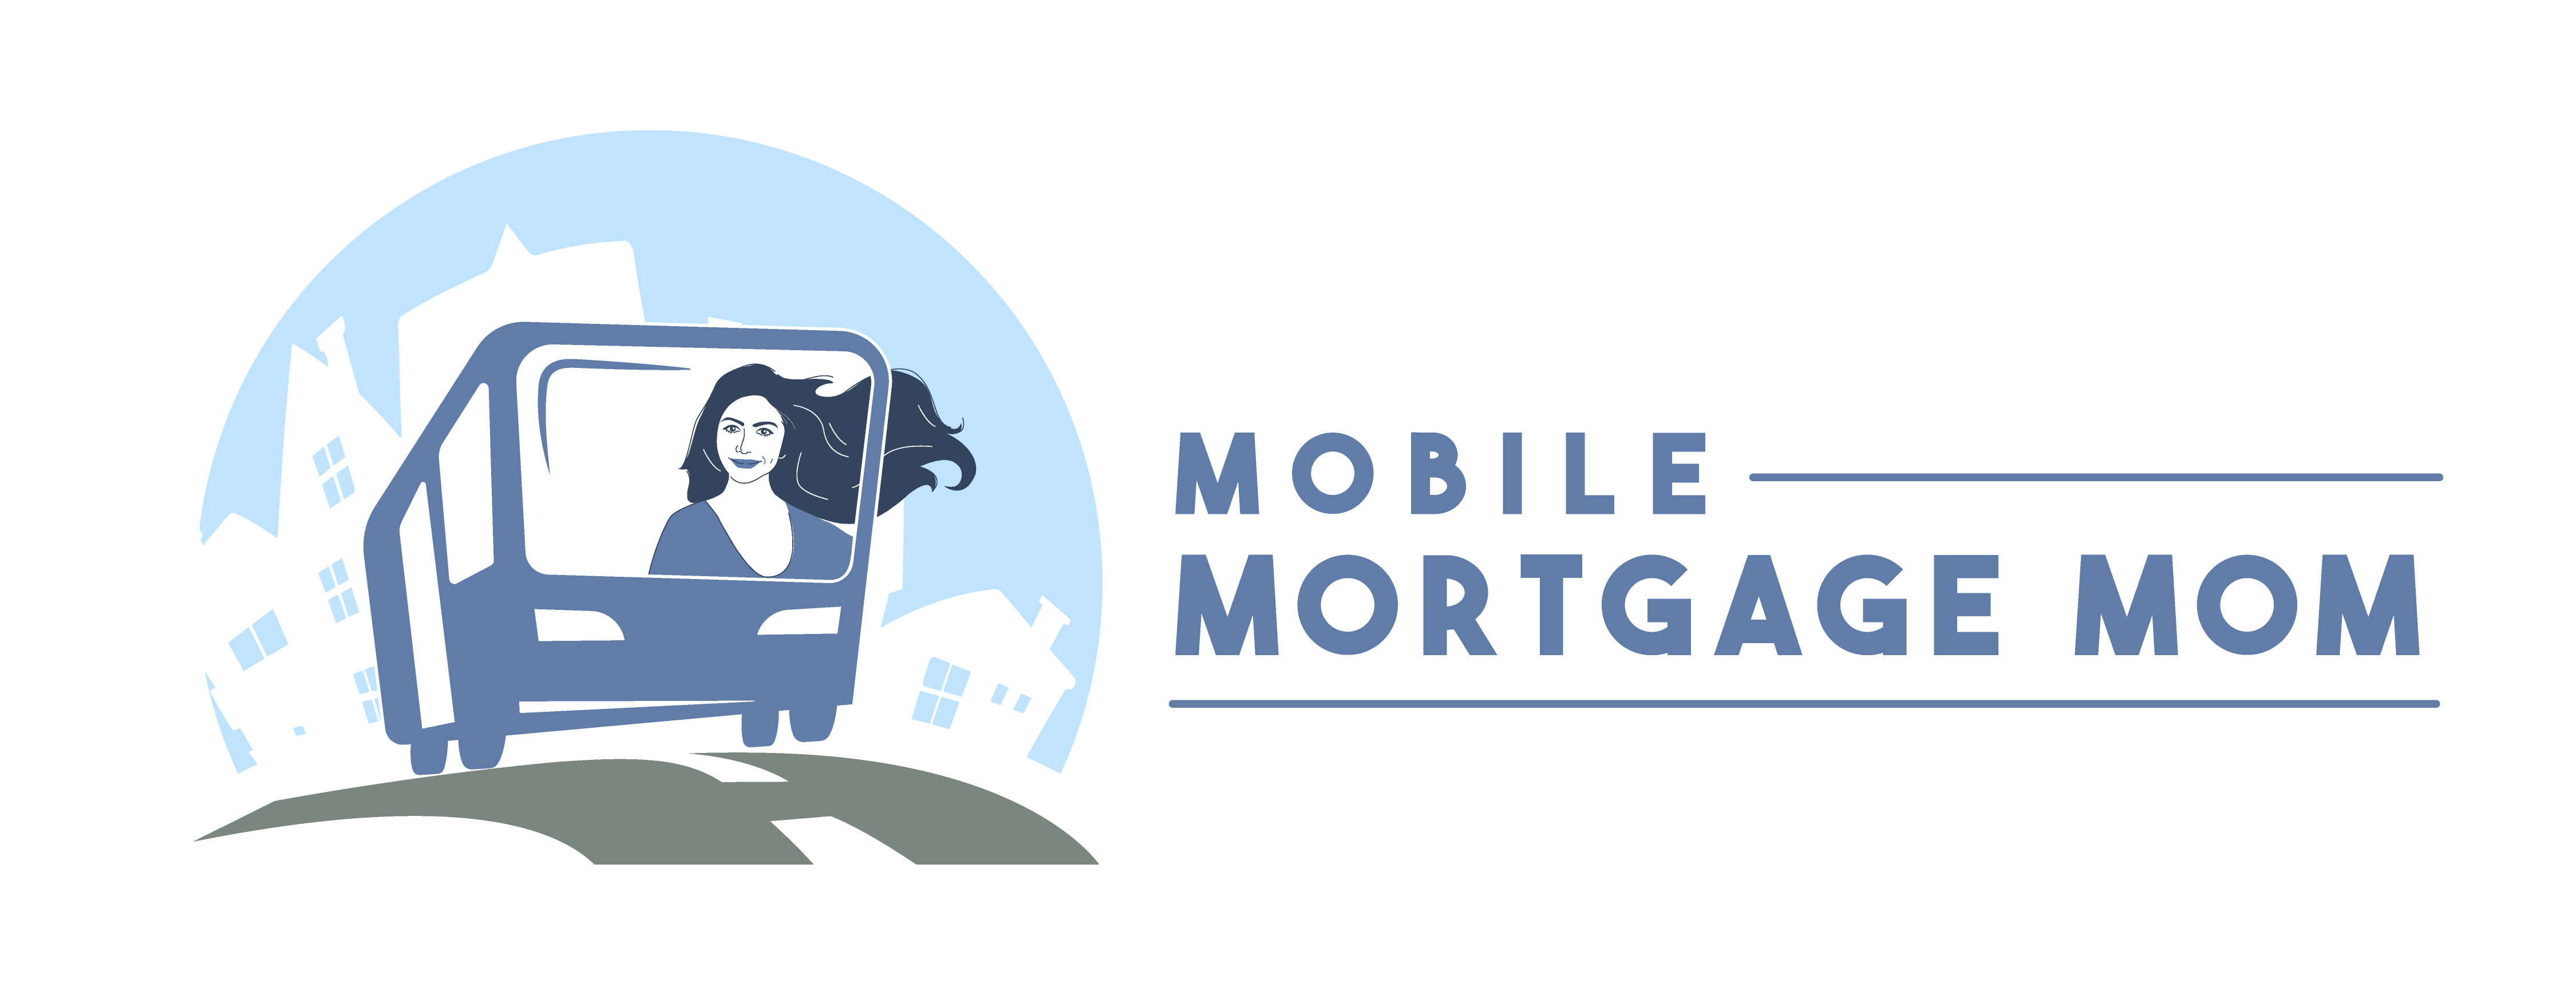 Mobile Mortgage Mom